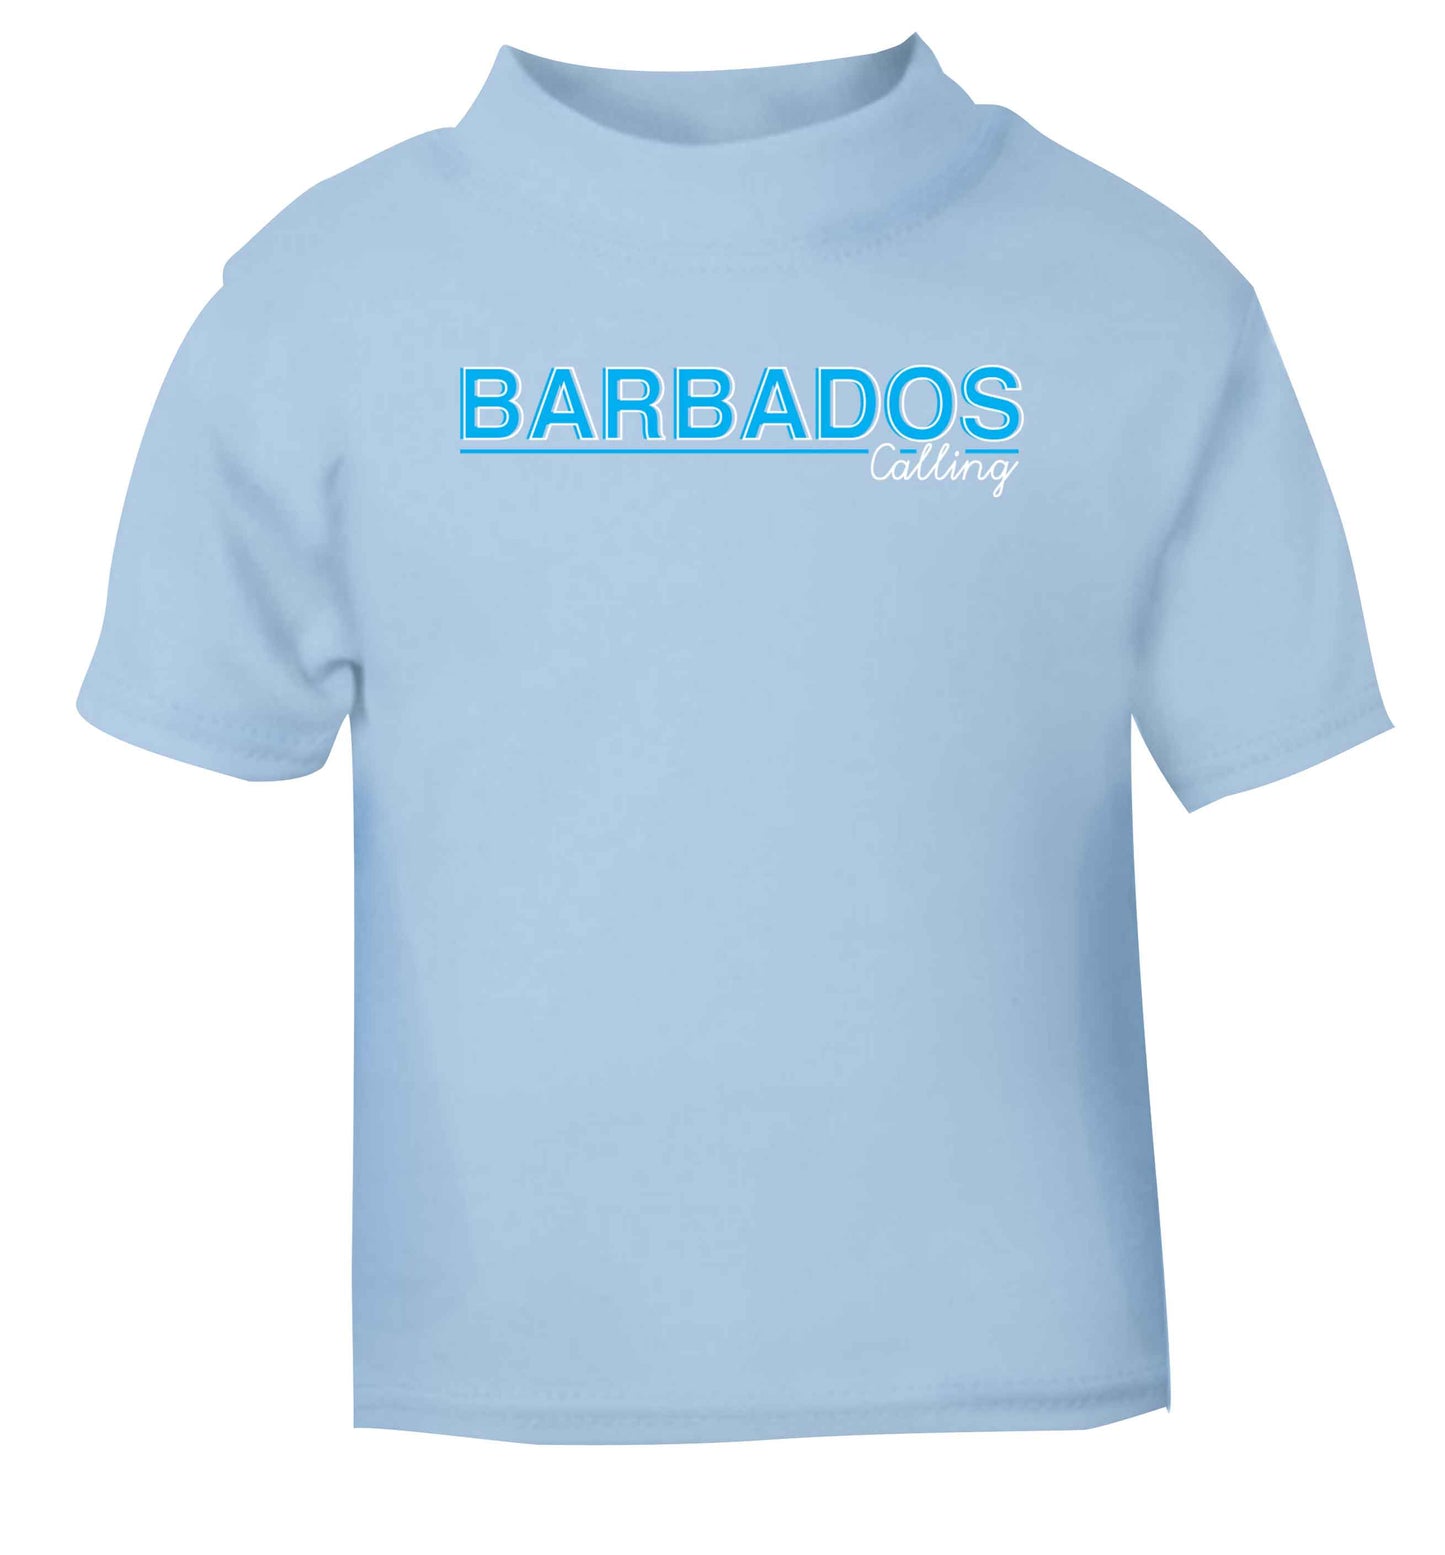 Barbados calling light blue Baby Toddler Tshirt 2 Years